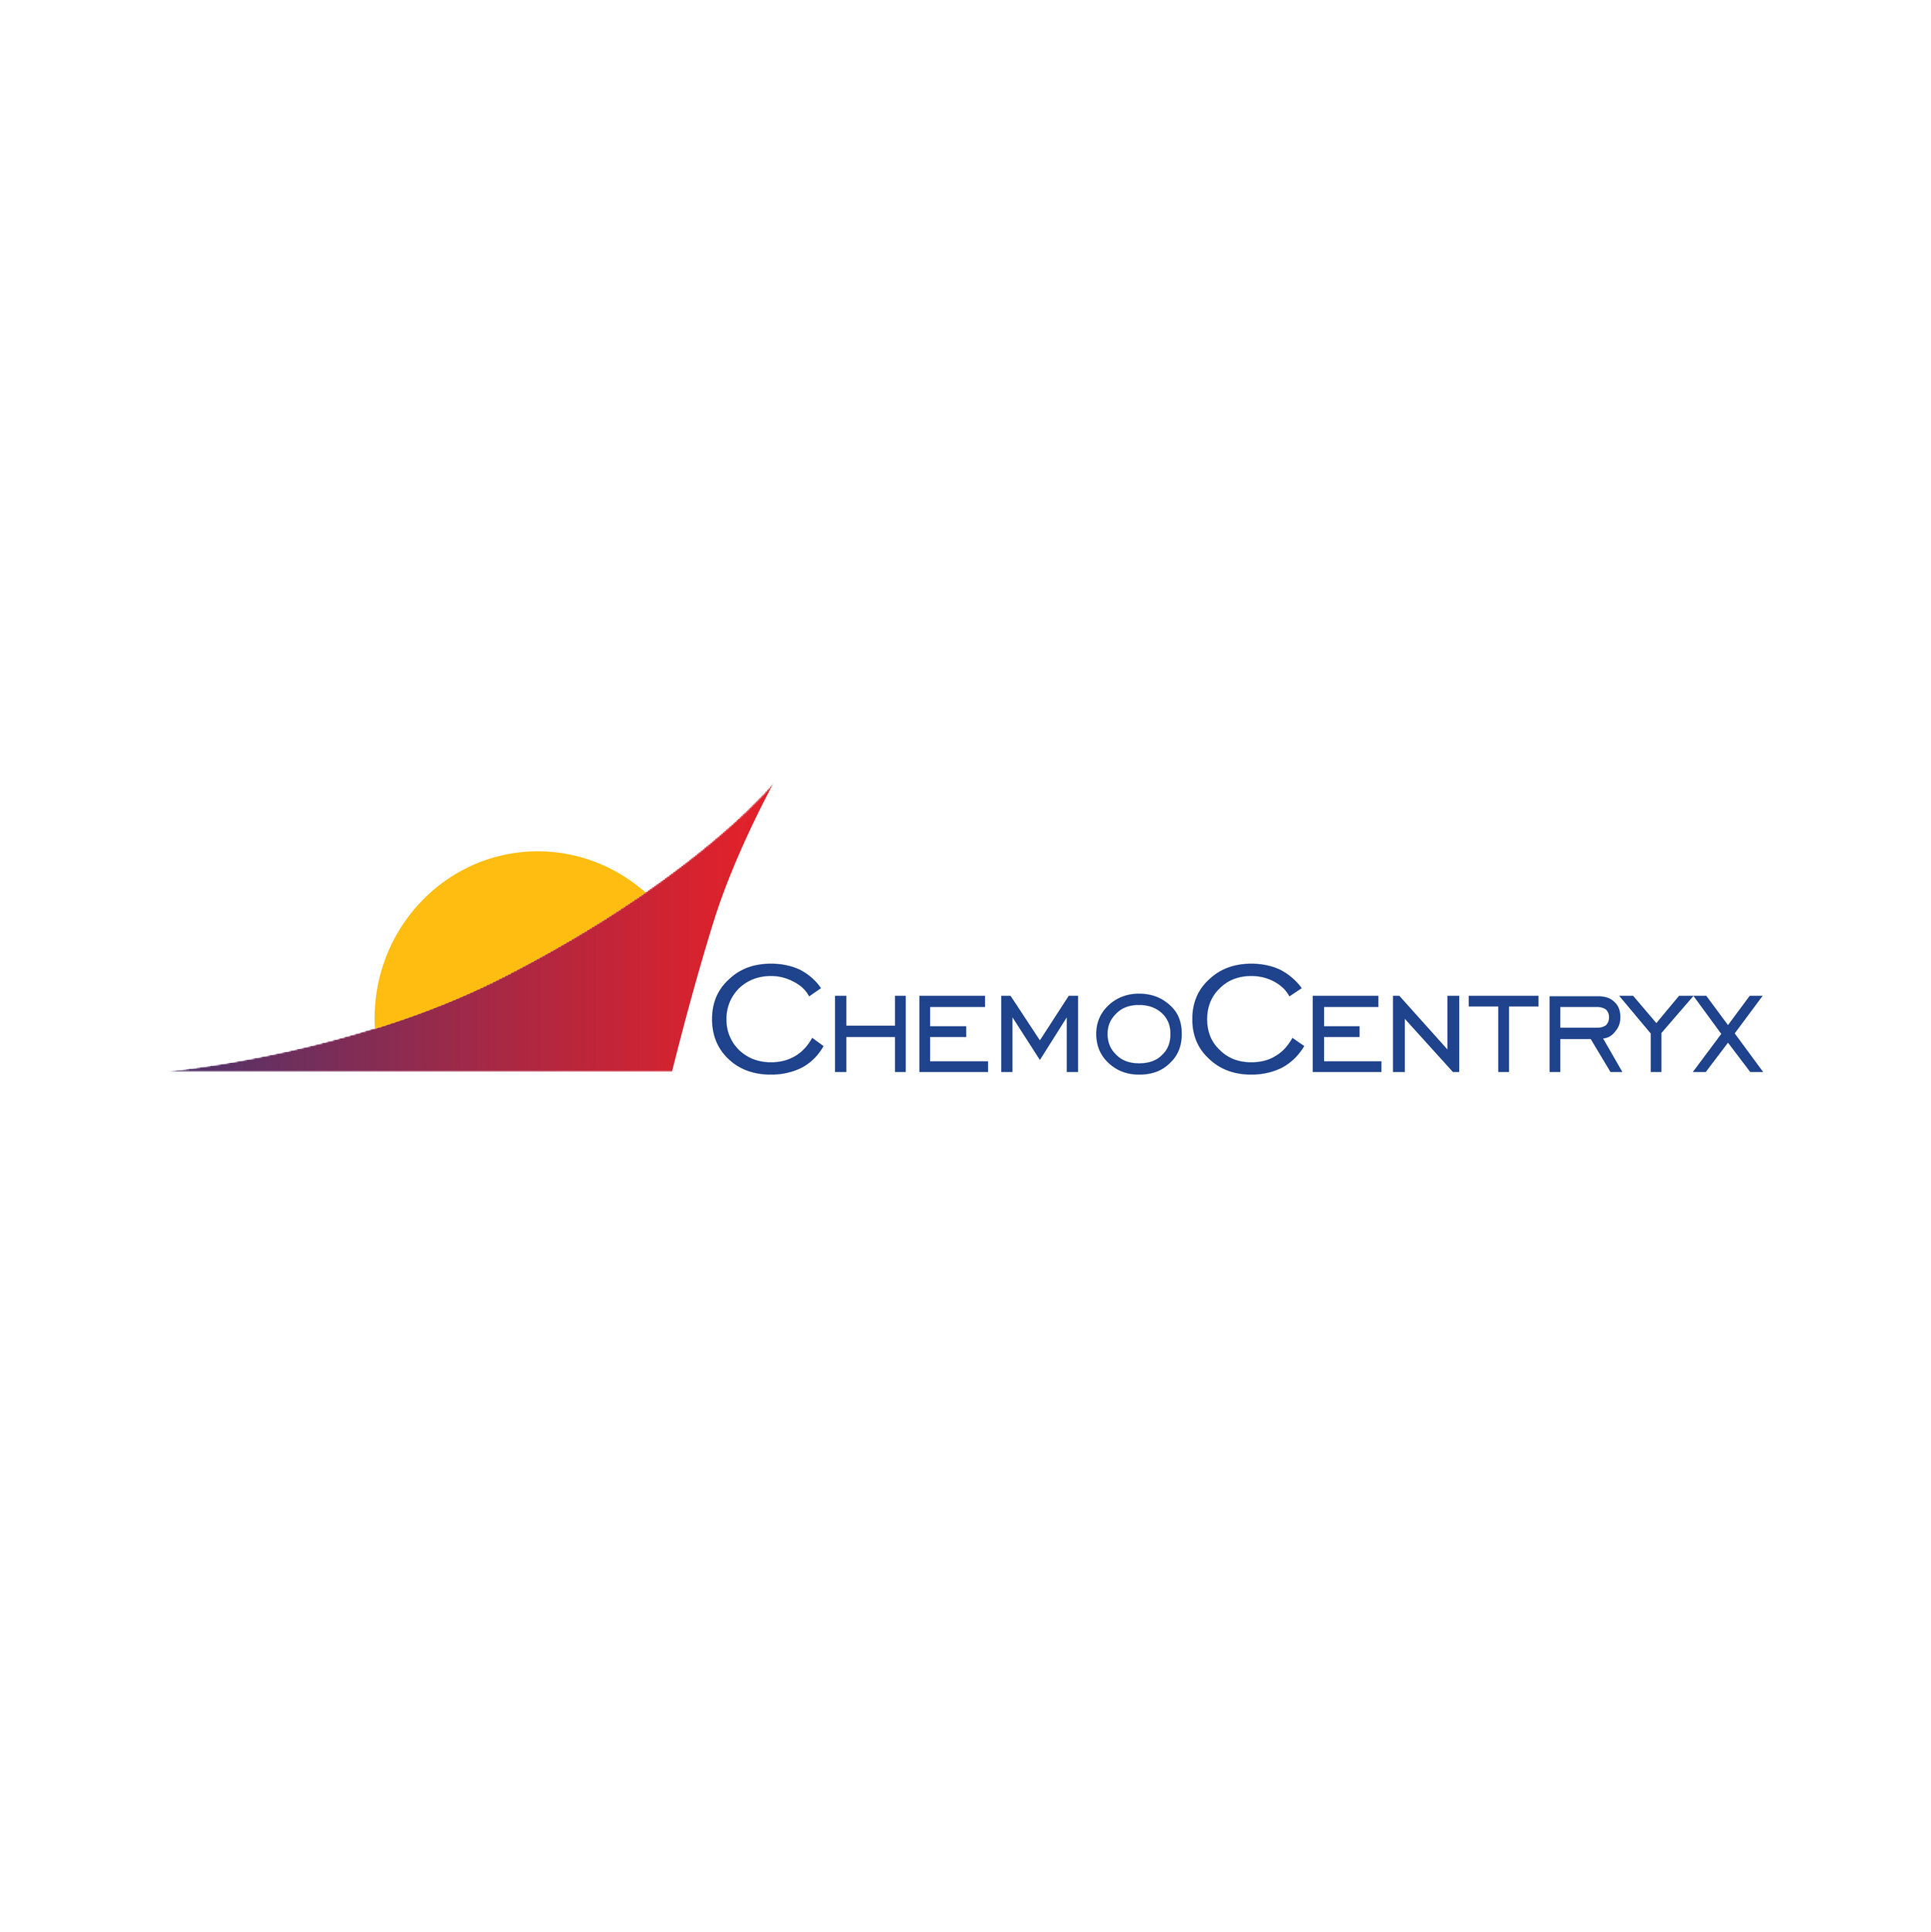 ChemoCentryx-2019-01 copy.jpg